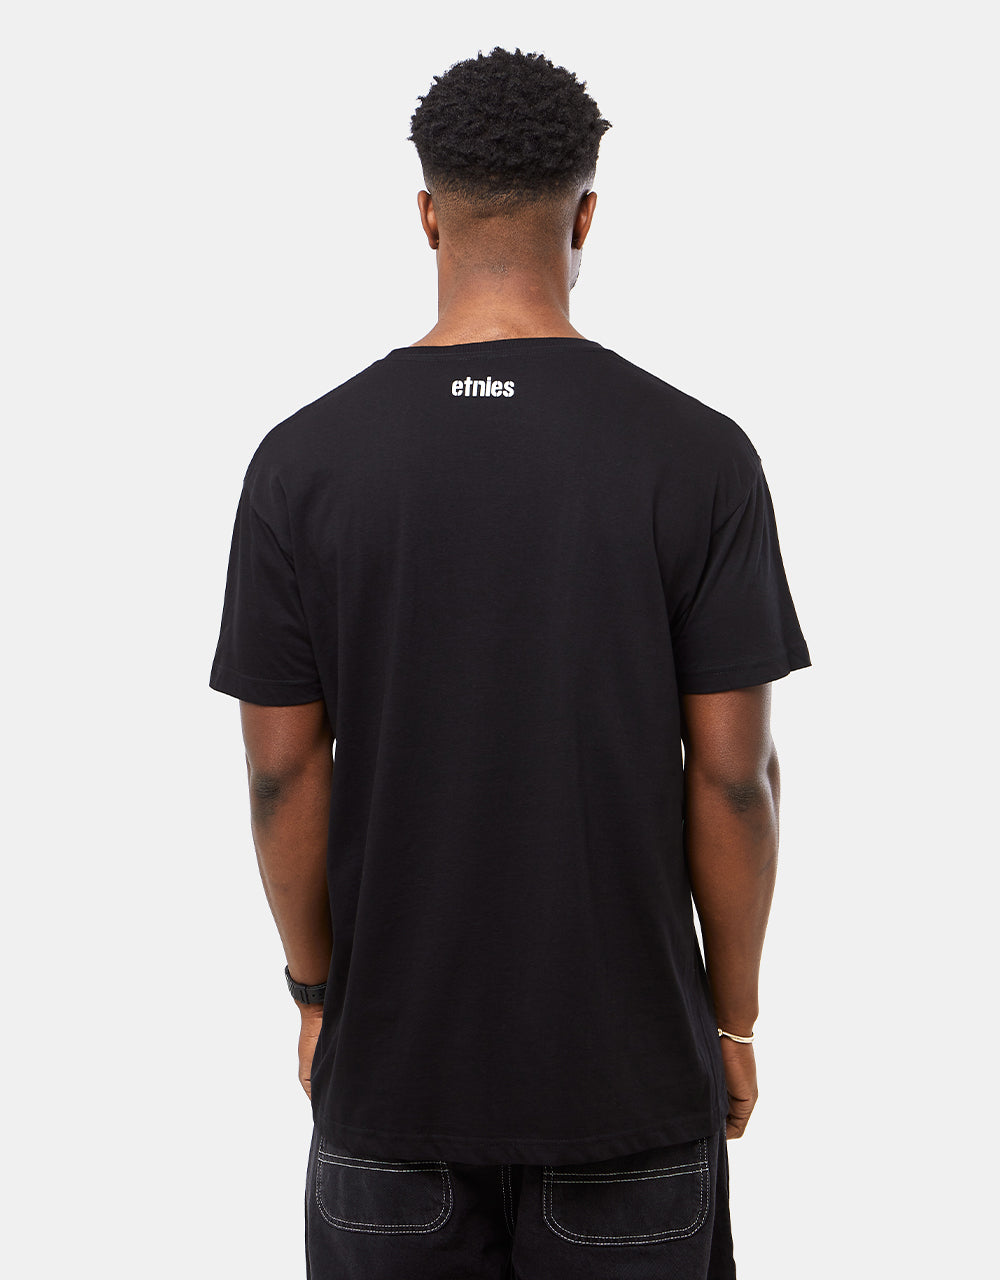 Etnies x Independent T-Shirt - Black